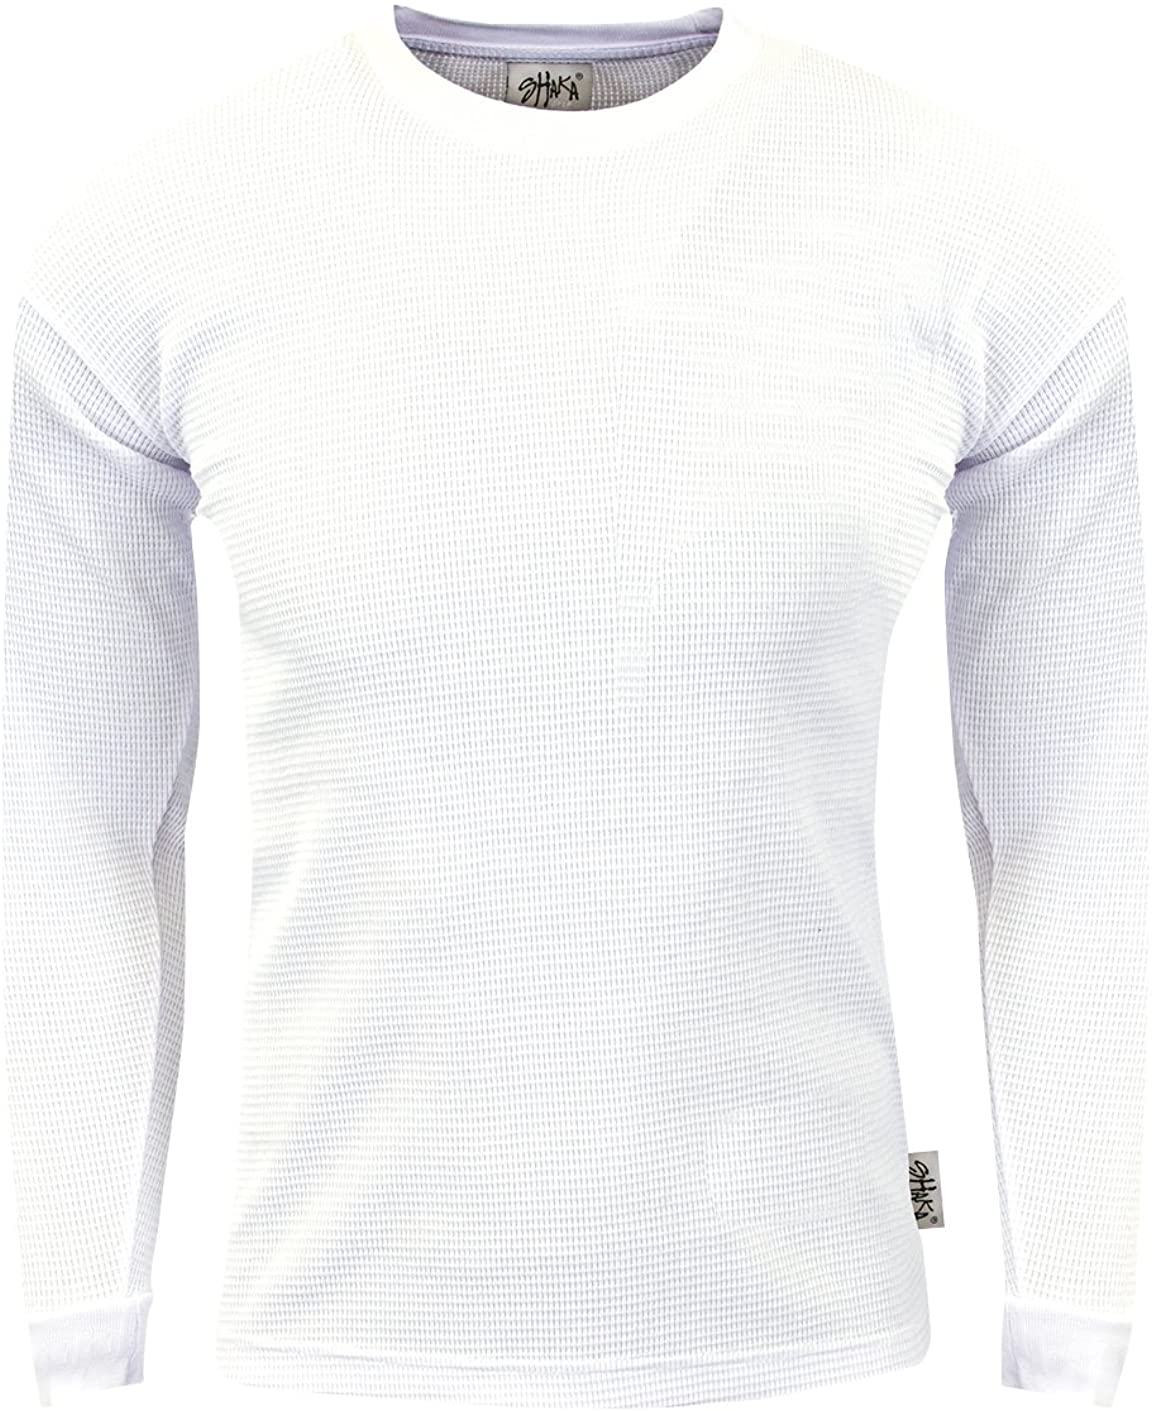 Heavyweight Waffle Thermal T Shirt Long Sleeve Crewneck Knitted Top Regular Big Size XS-5XL Shaka Wear Men’s Knit Sweater 